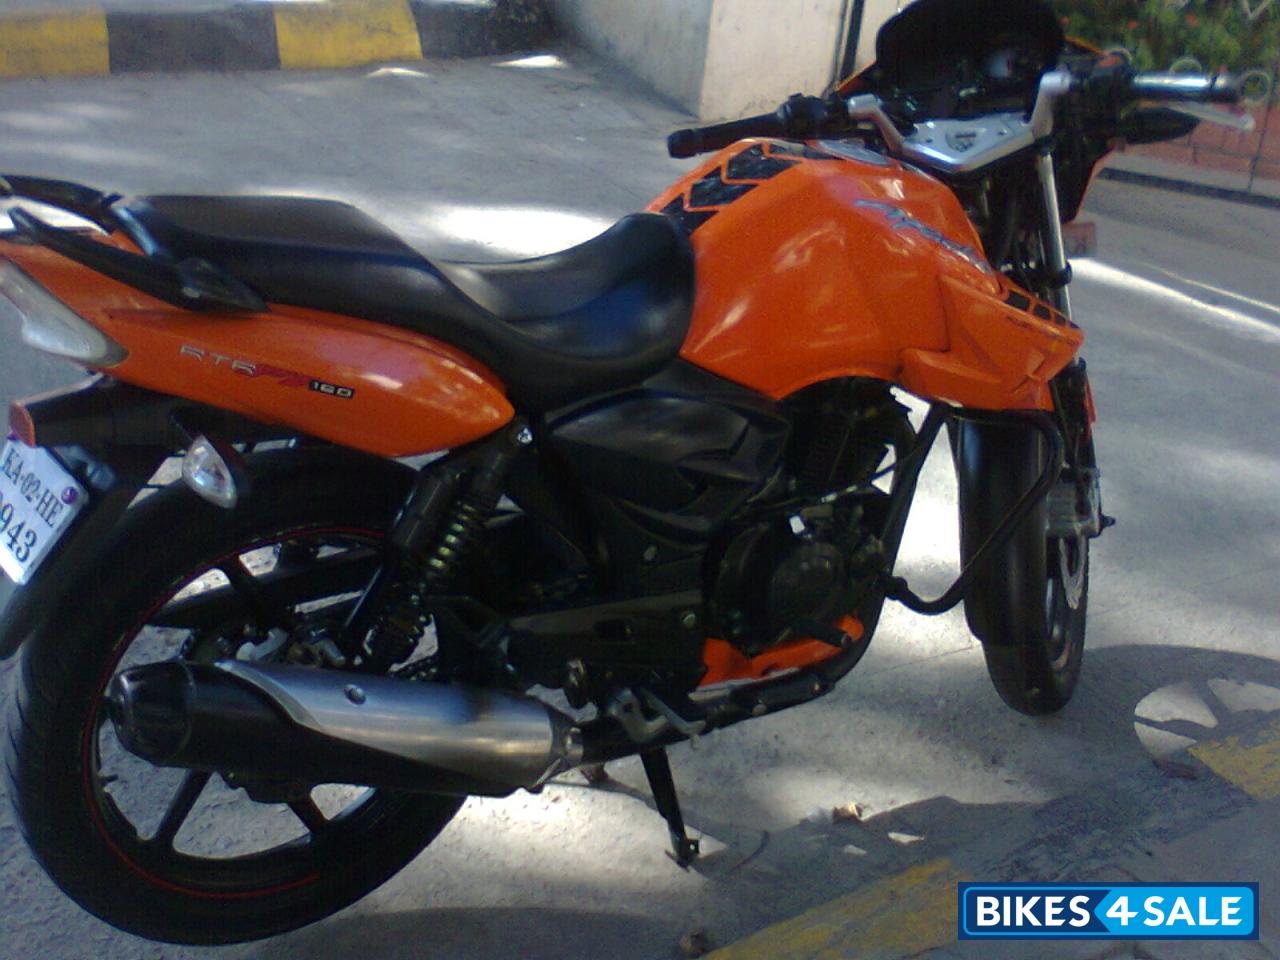 Used 09 Model Tvs Apache Rtr Fi 160 For Sale In Bangalore Id Orange Colour Bikes4sale